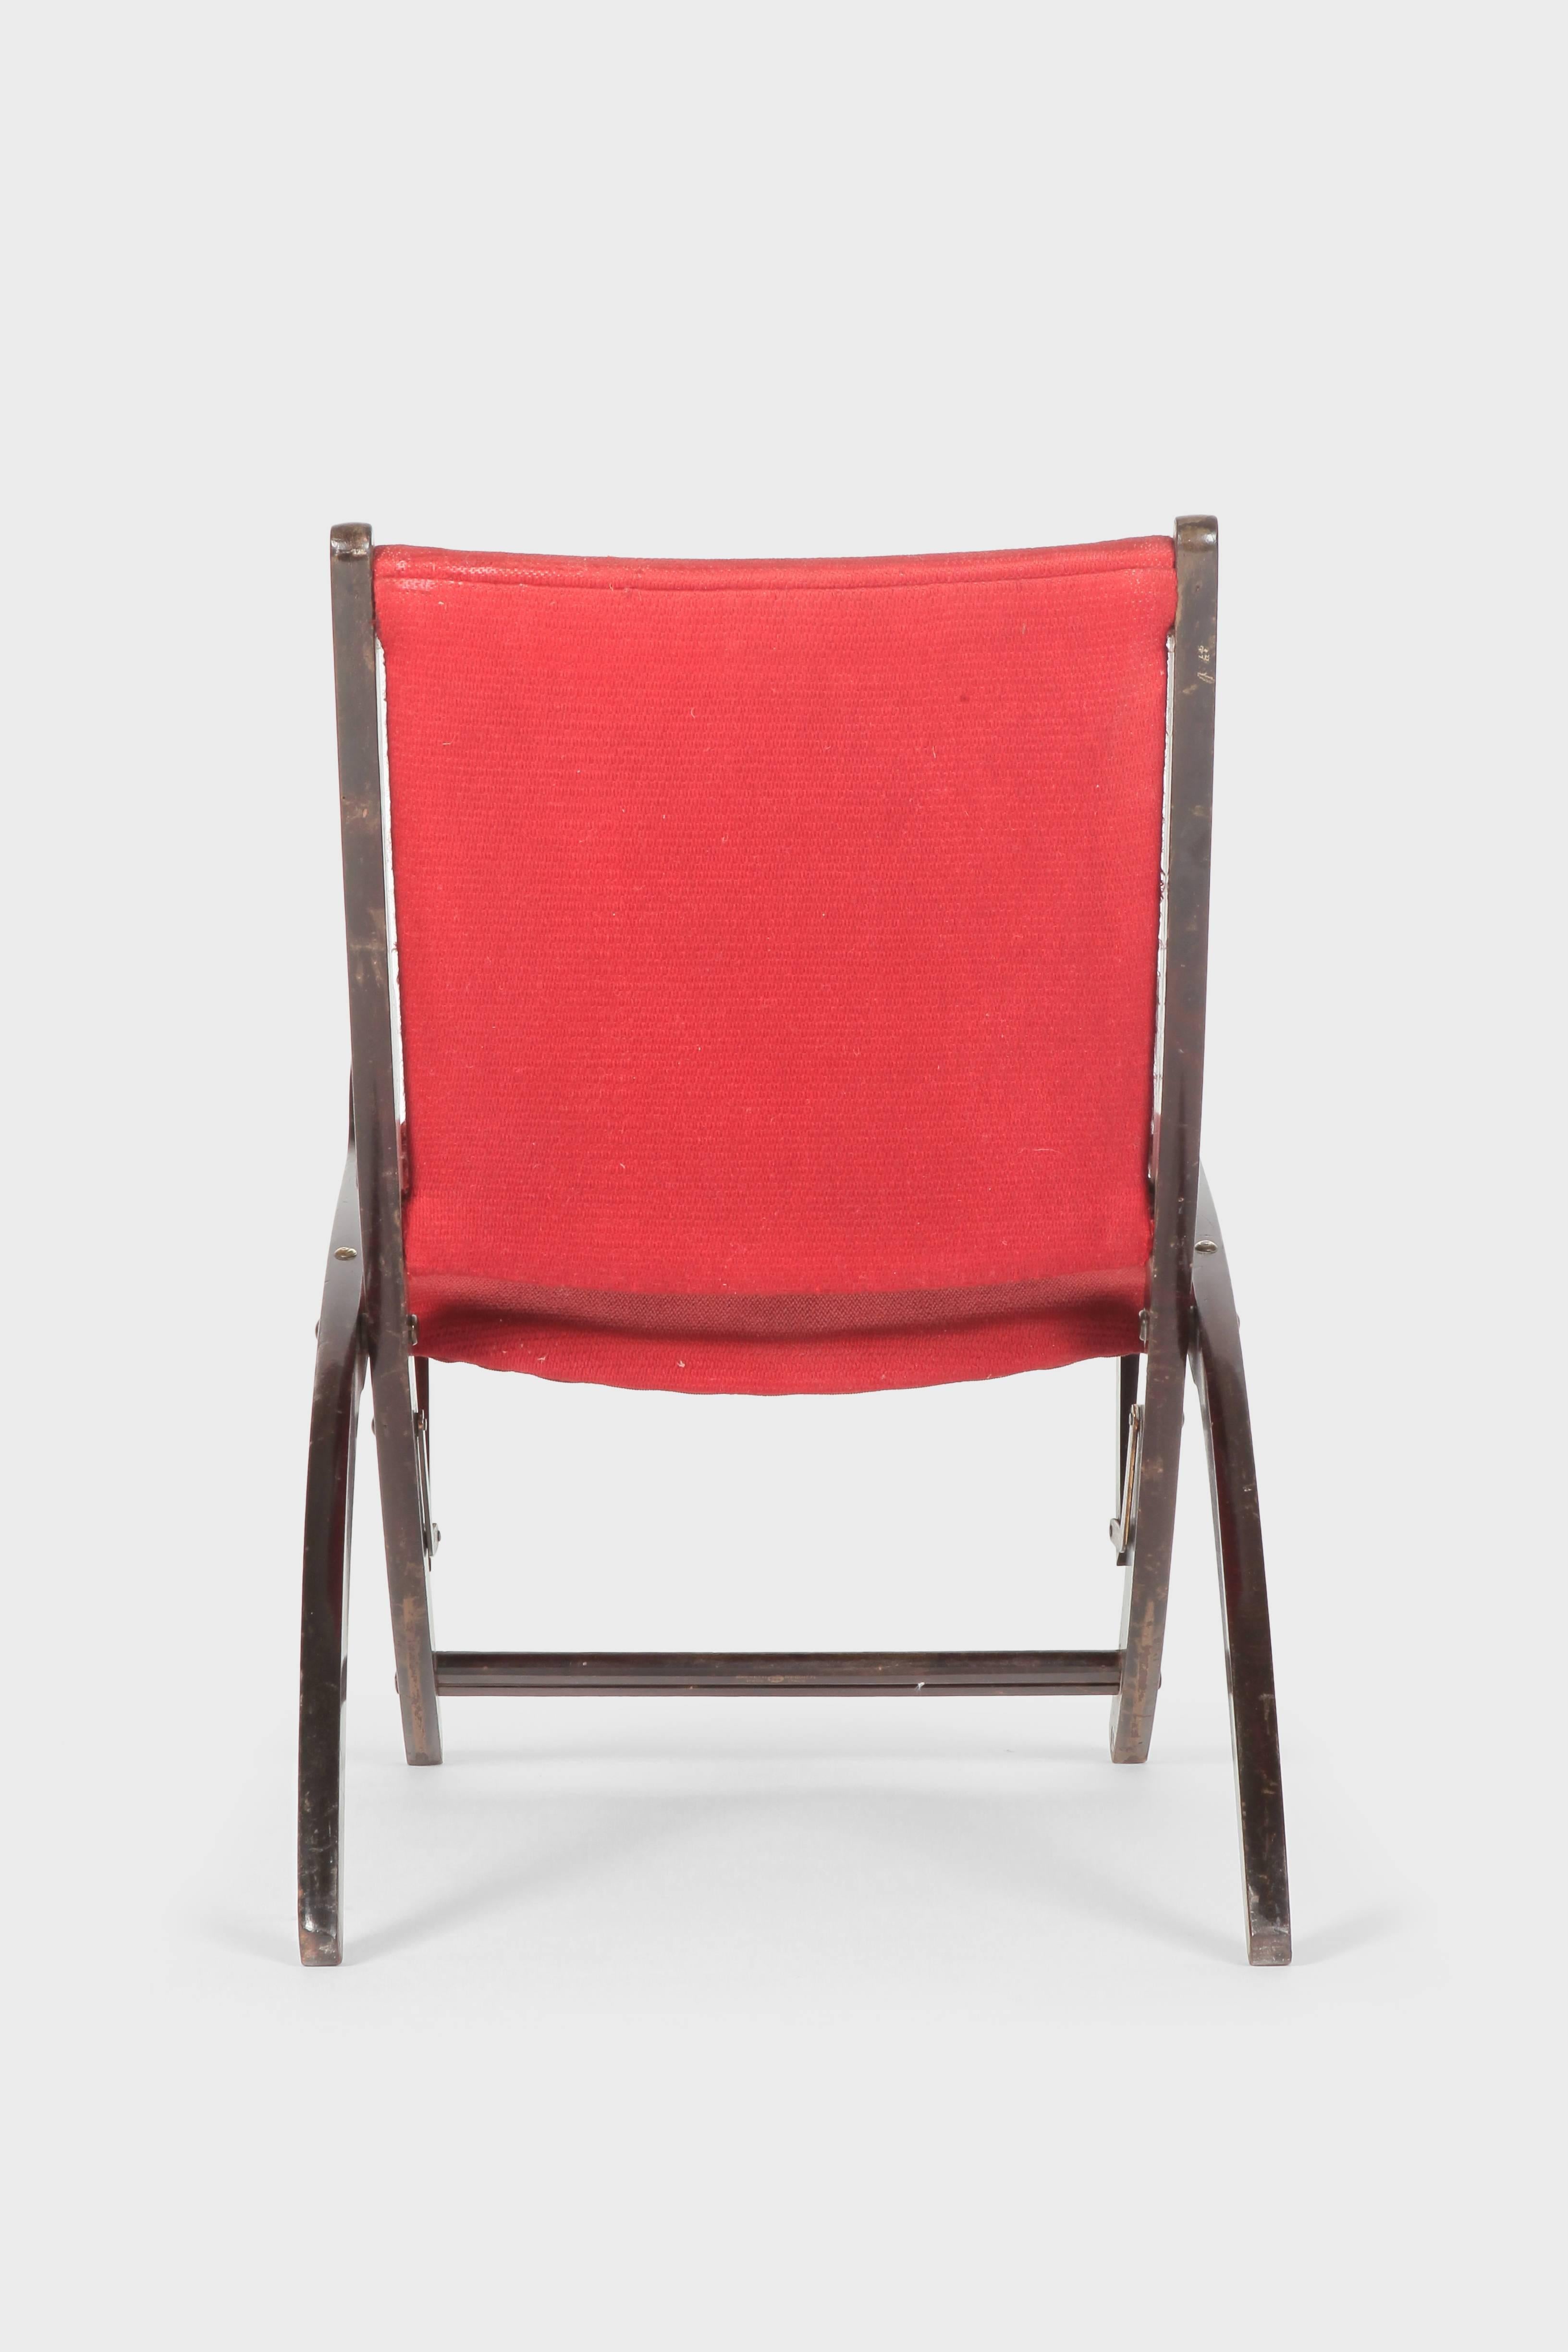 European Gio Ponti “Nifea” Folding Chair Fratelli Reguitti, 1950s